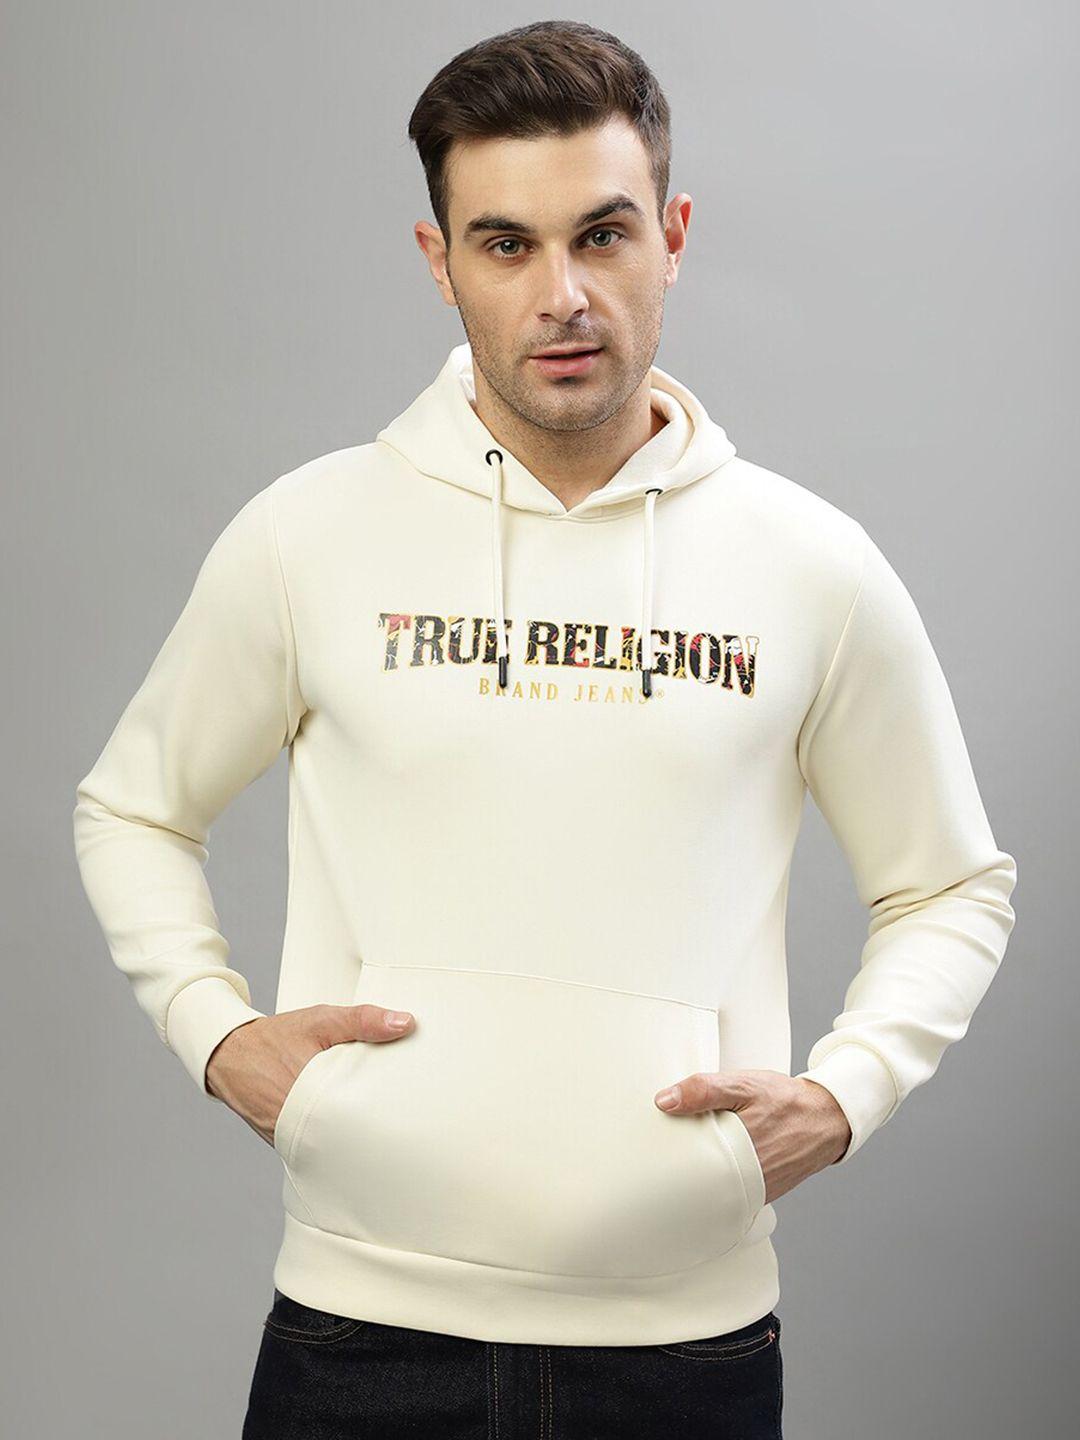 true religion typography printed hooded pullover sweatshirt